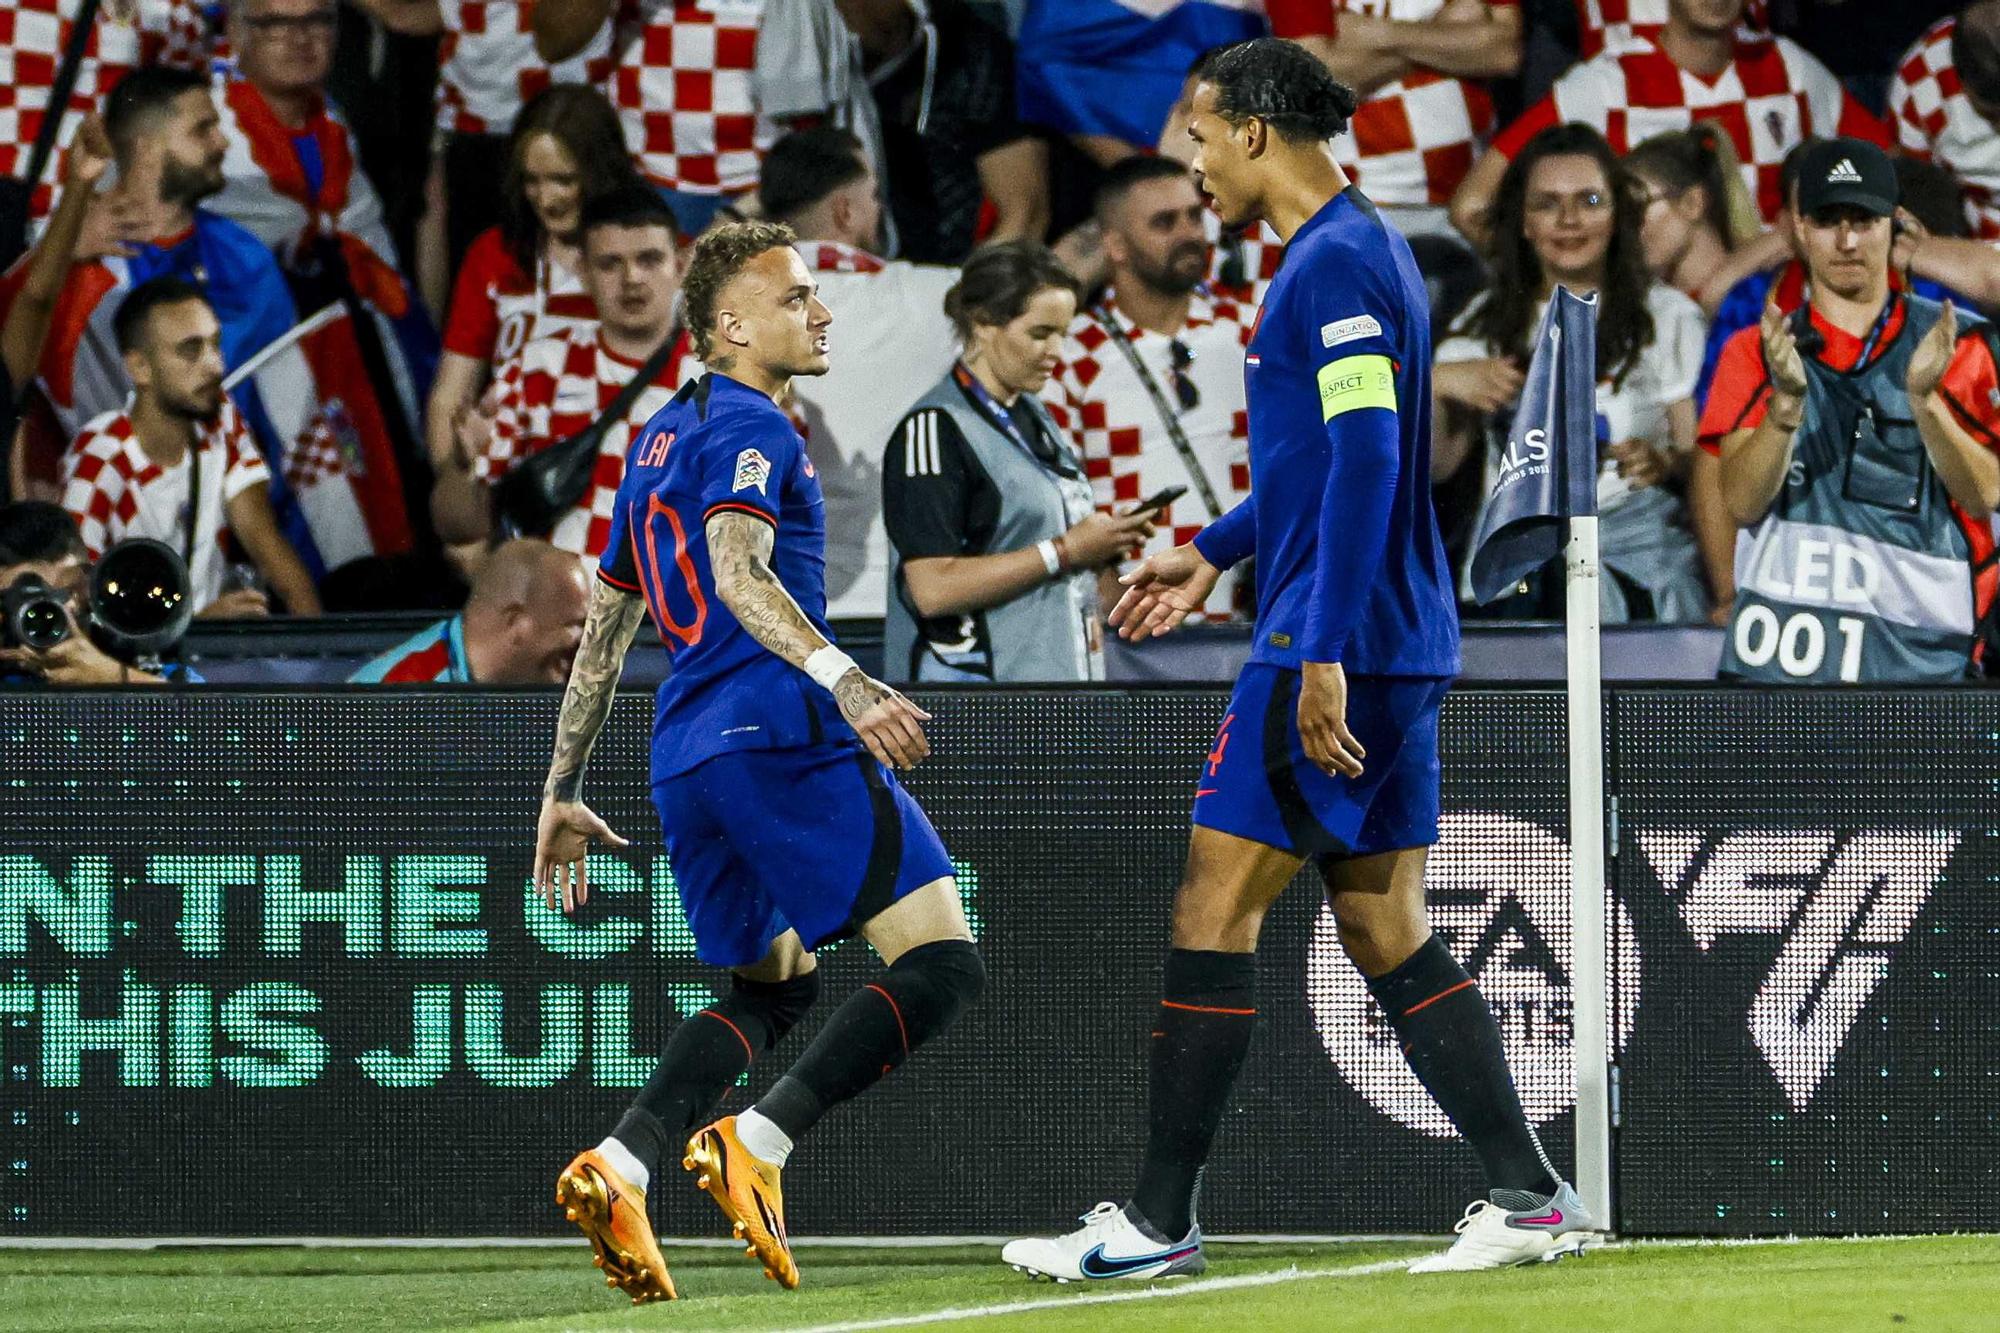 UEFA Nations League semi-final - Netherlands vs Croatia